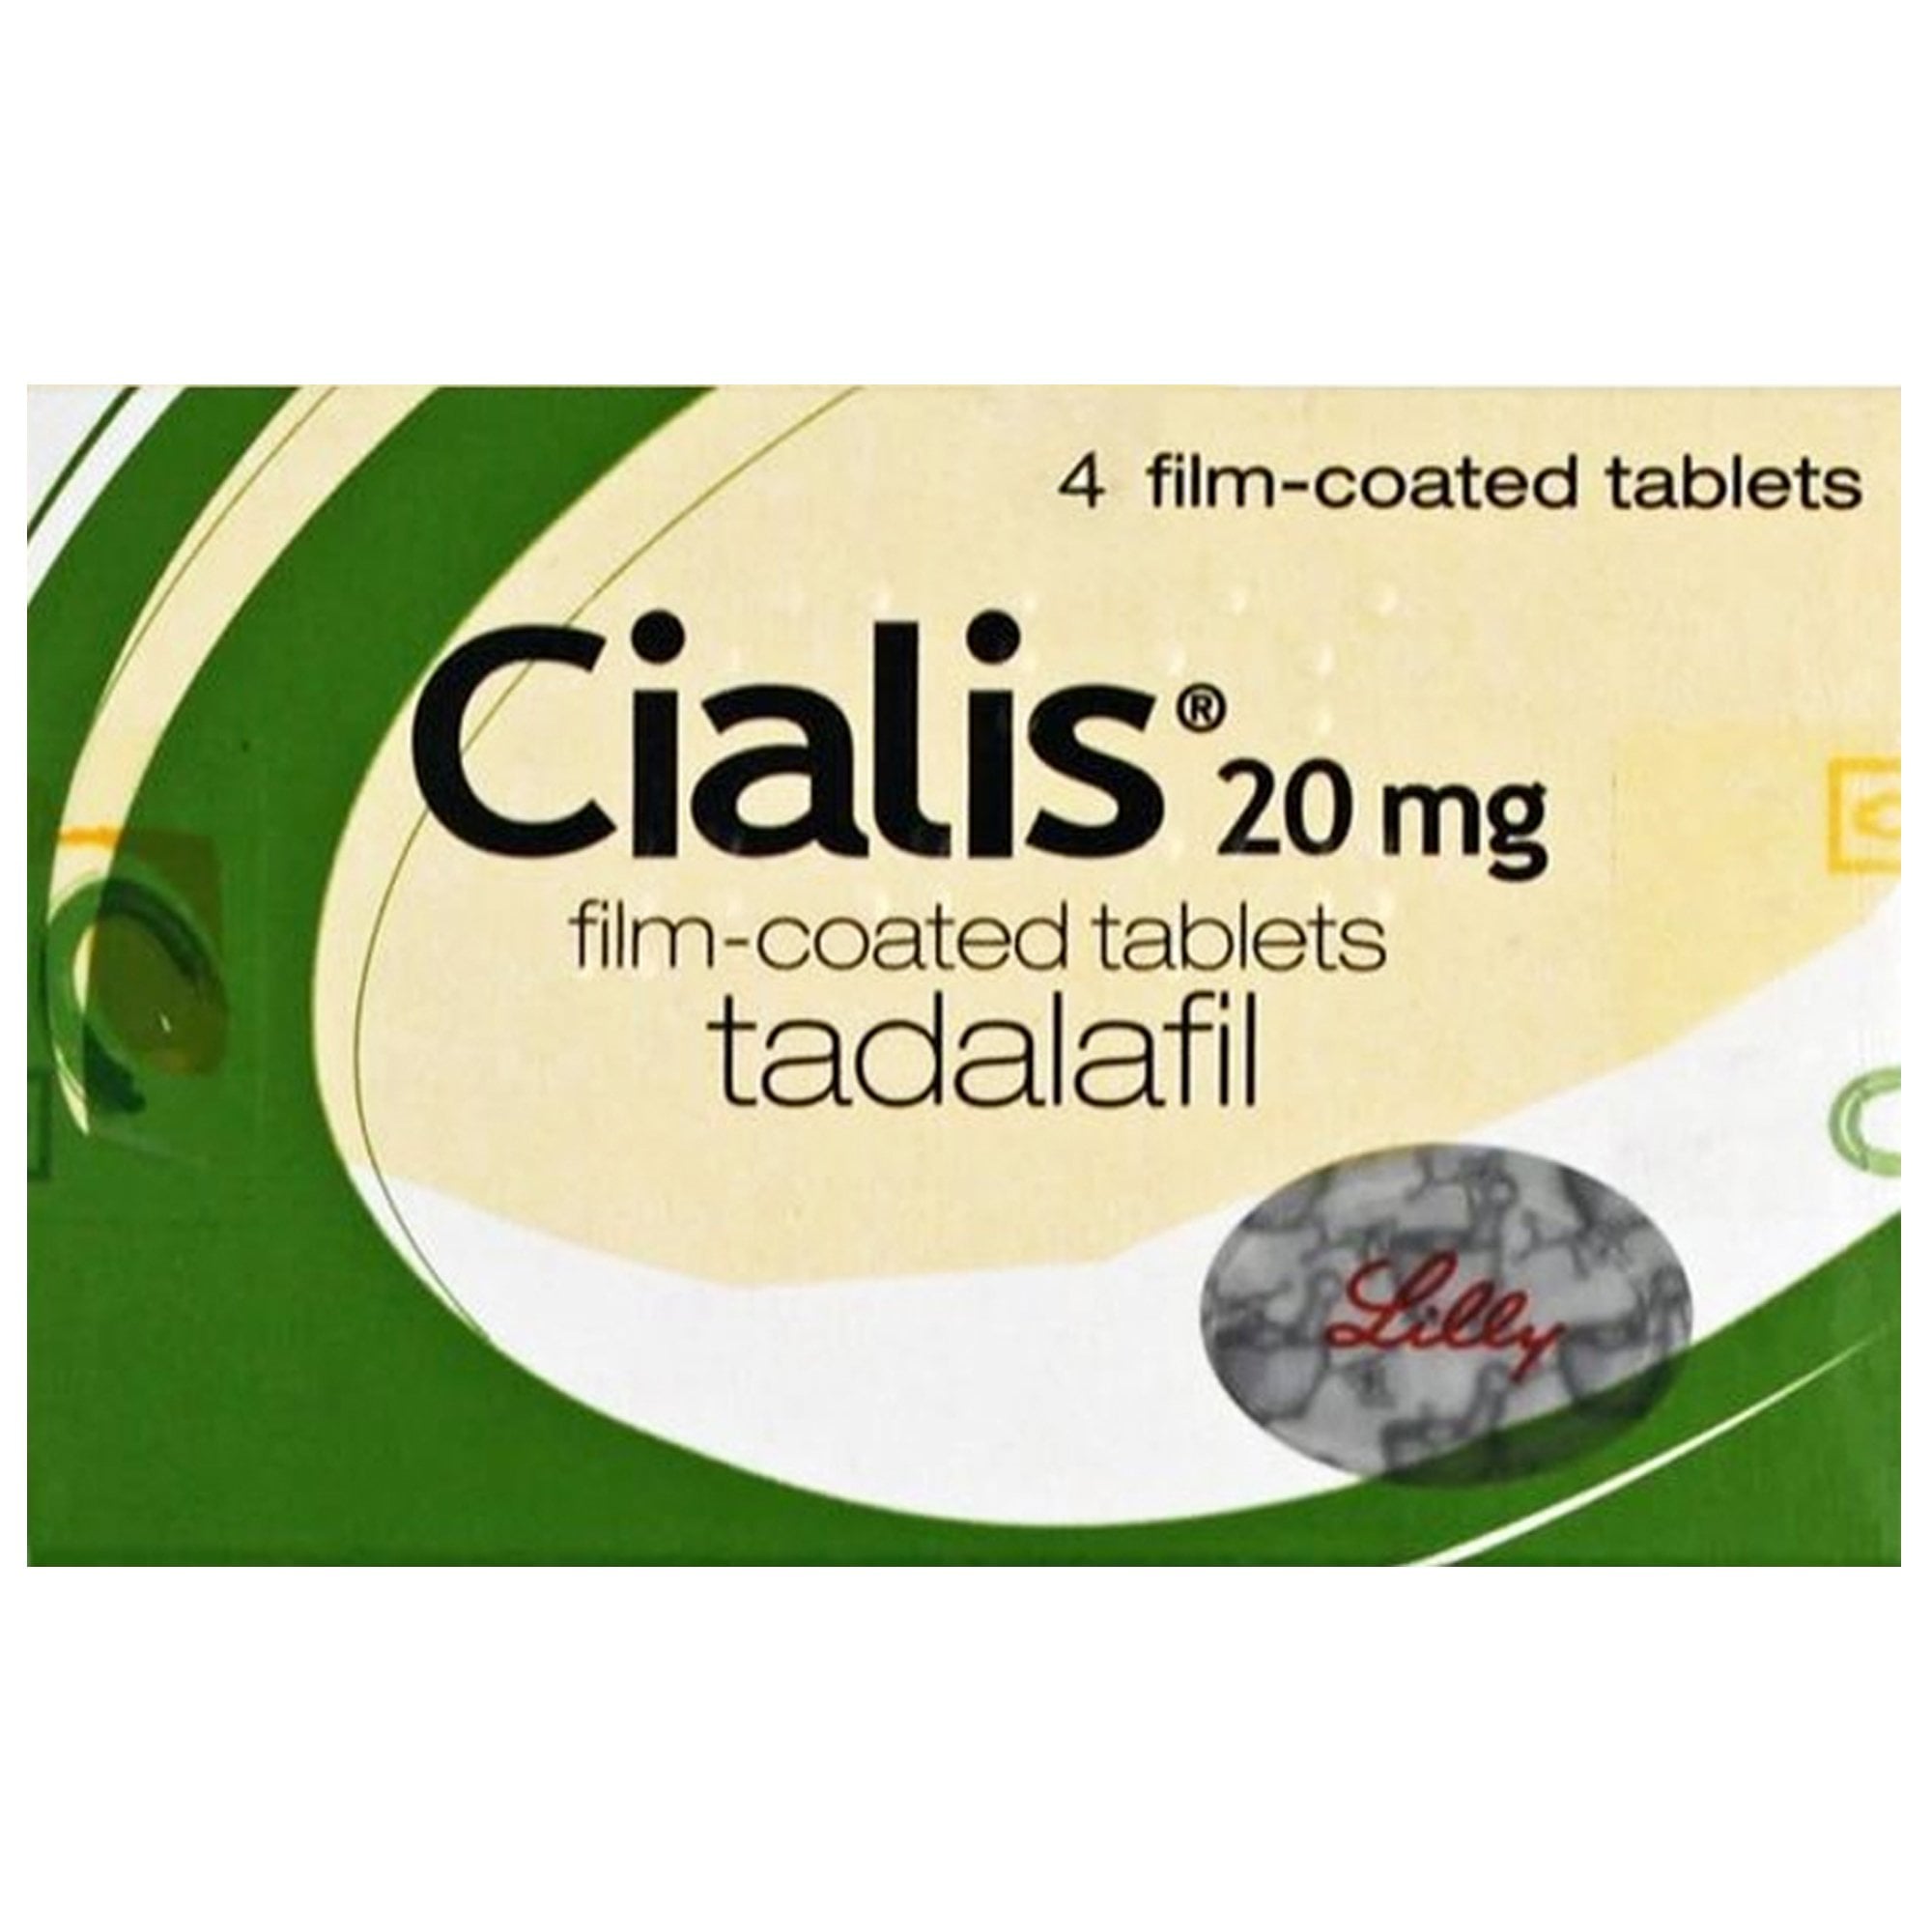 cialis-tadalafil-20mg-tablets-x-4-p12761-13862_zoom